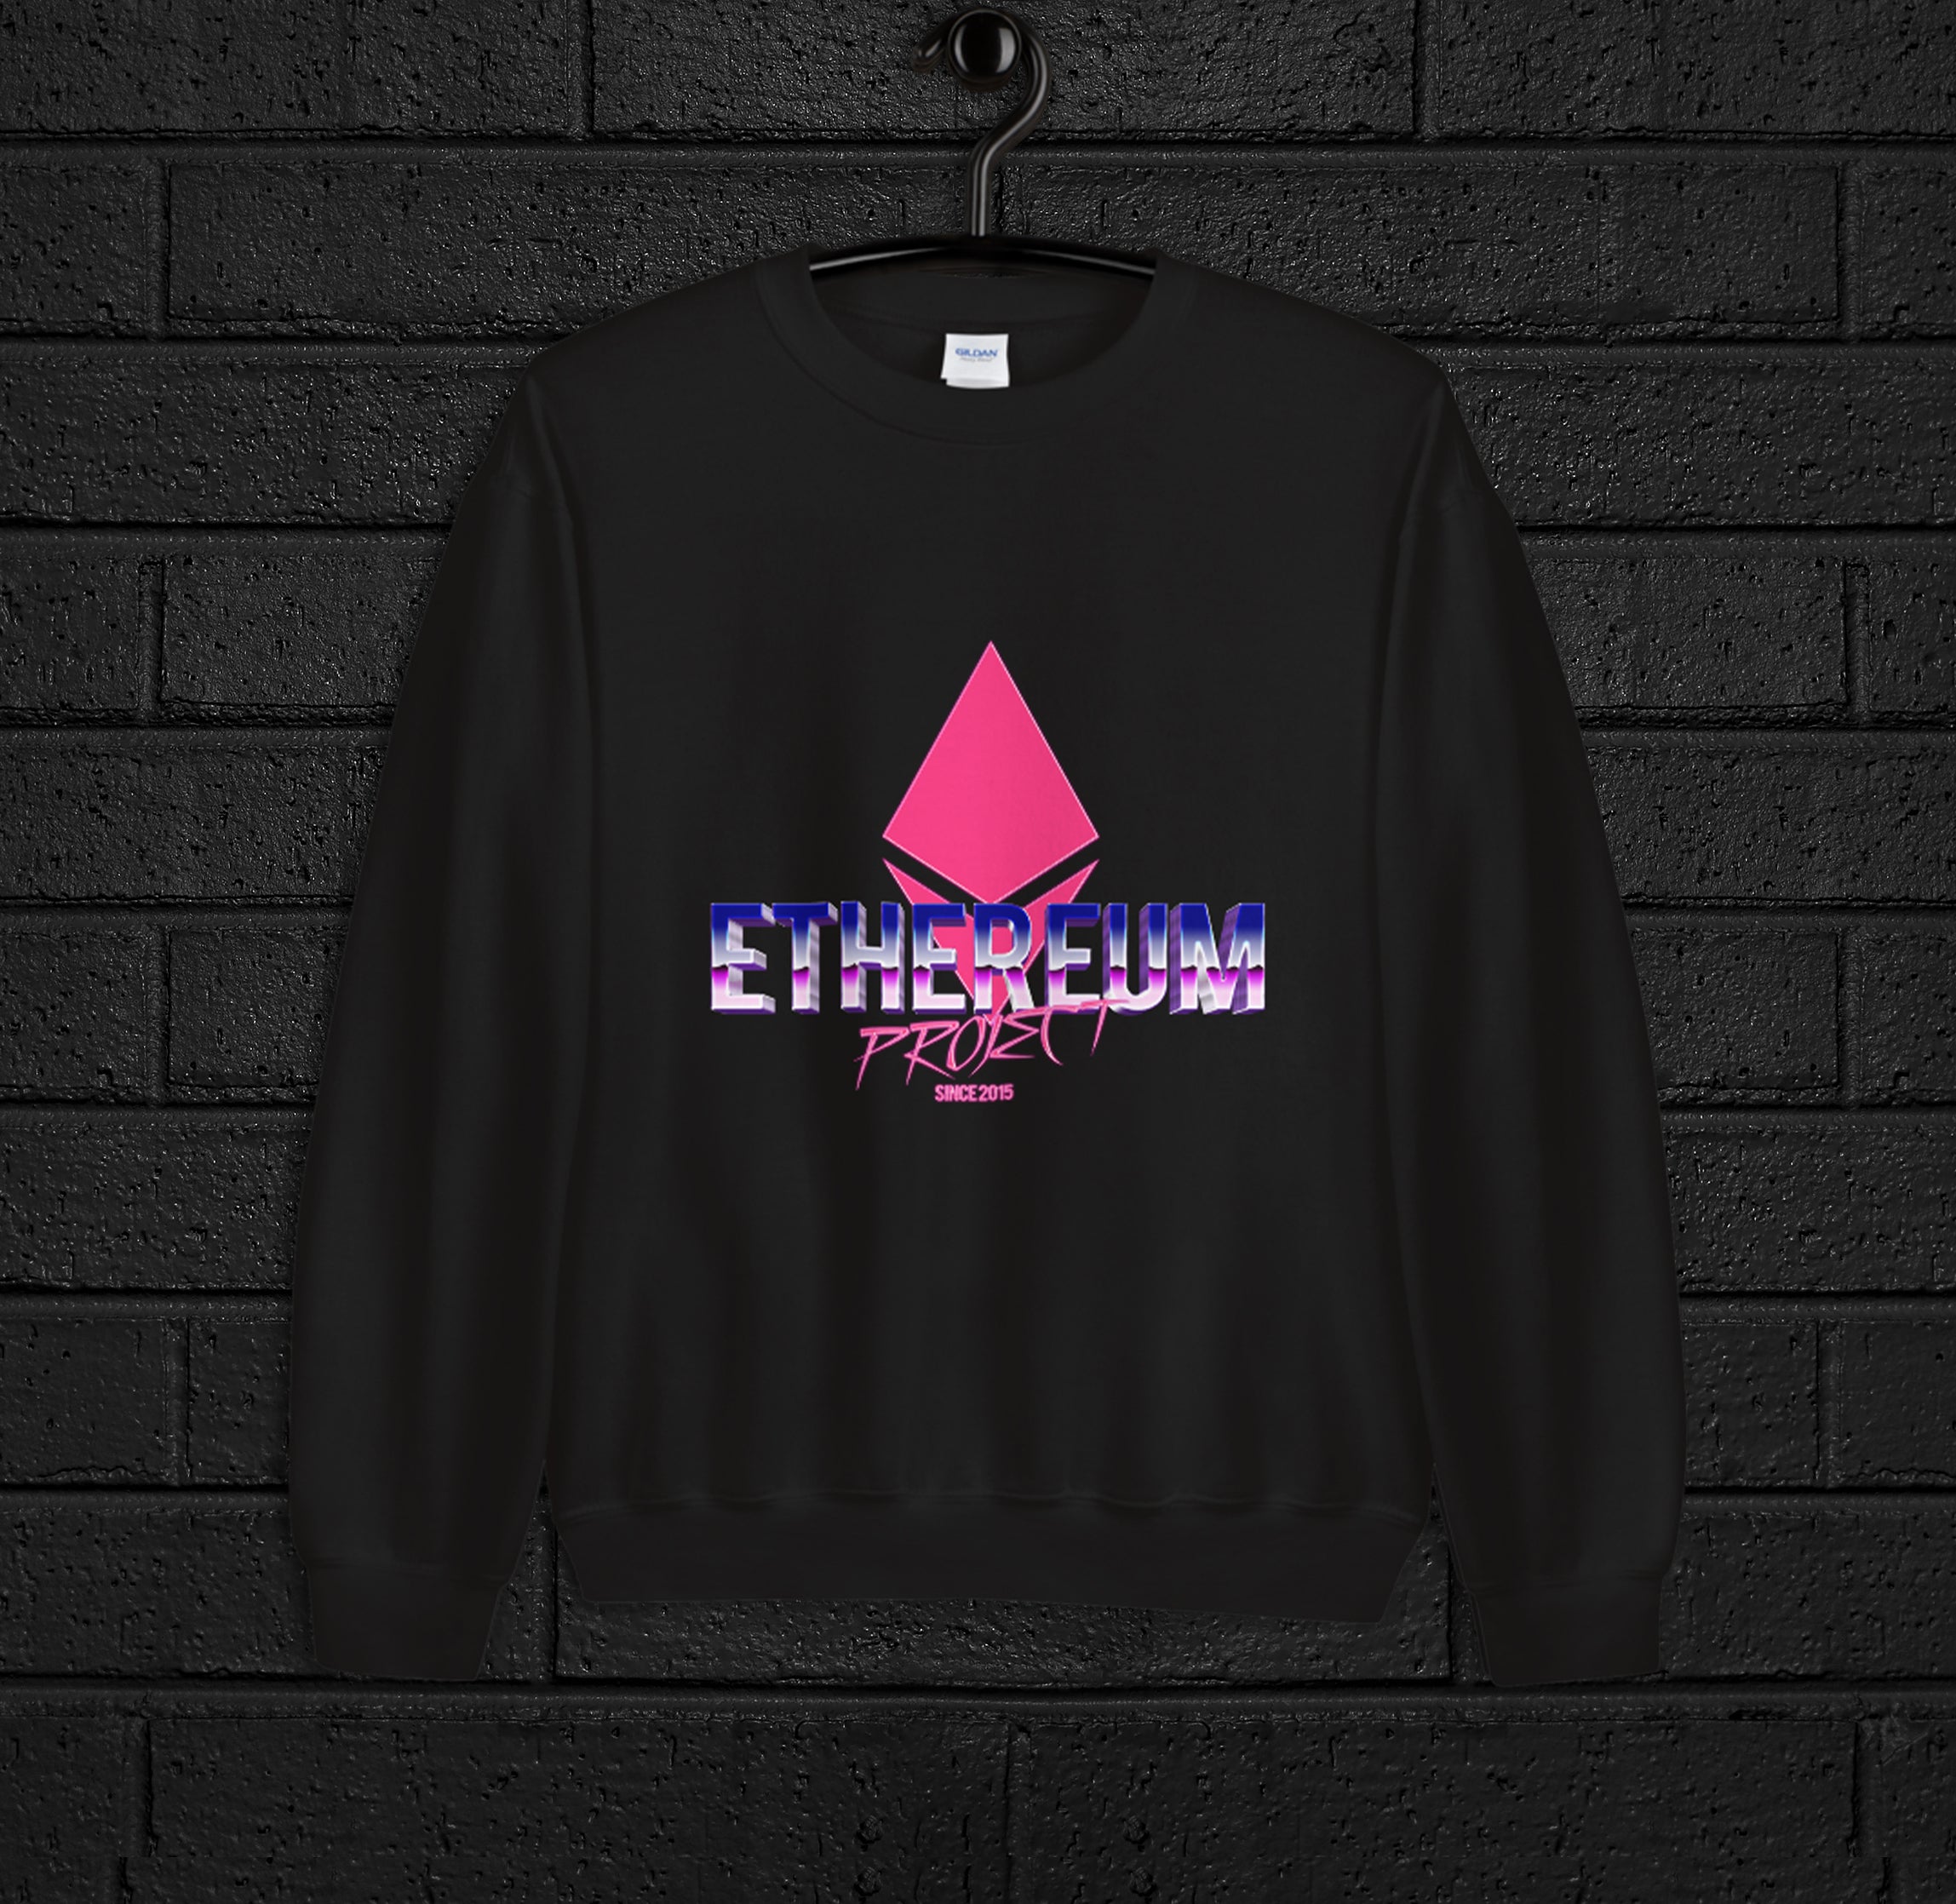 Ethereum Project 80s Retro Sweatshirt